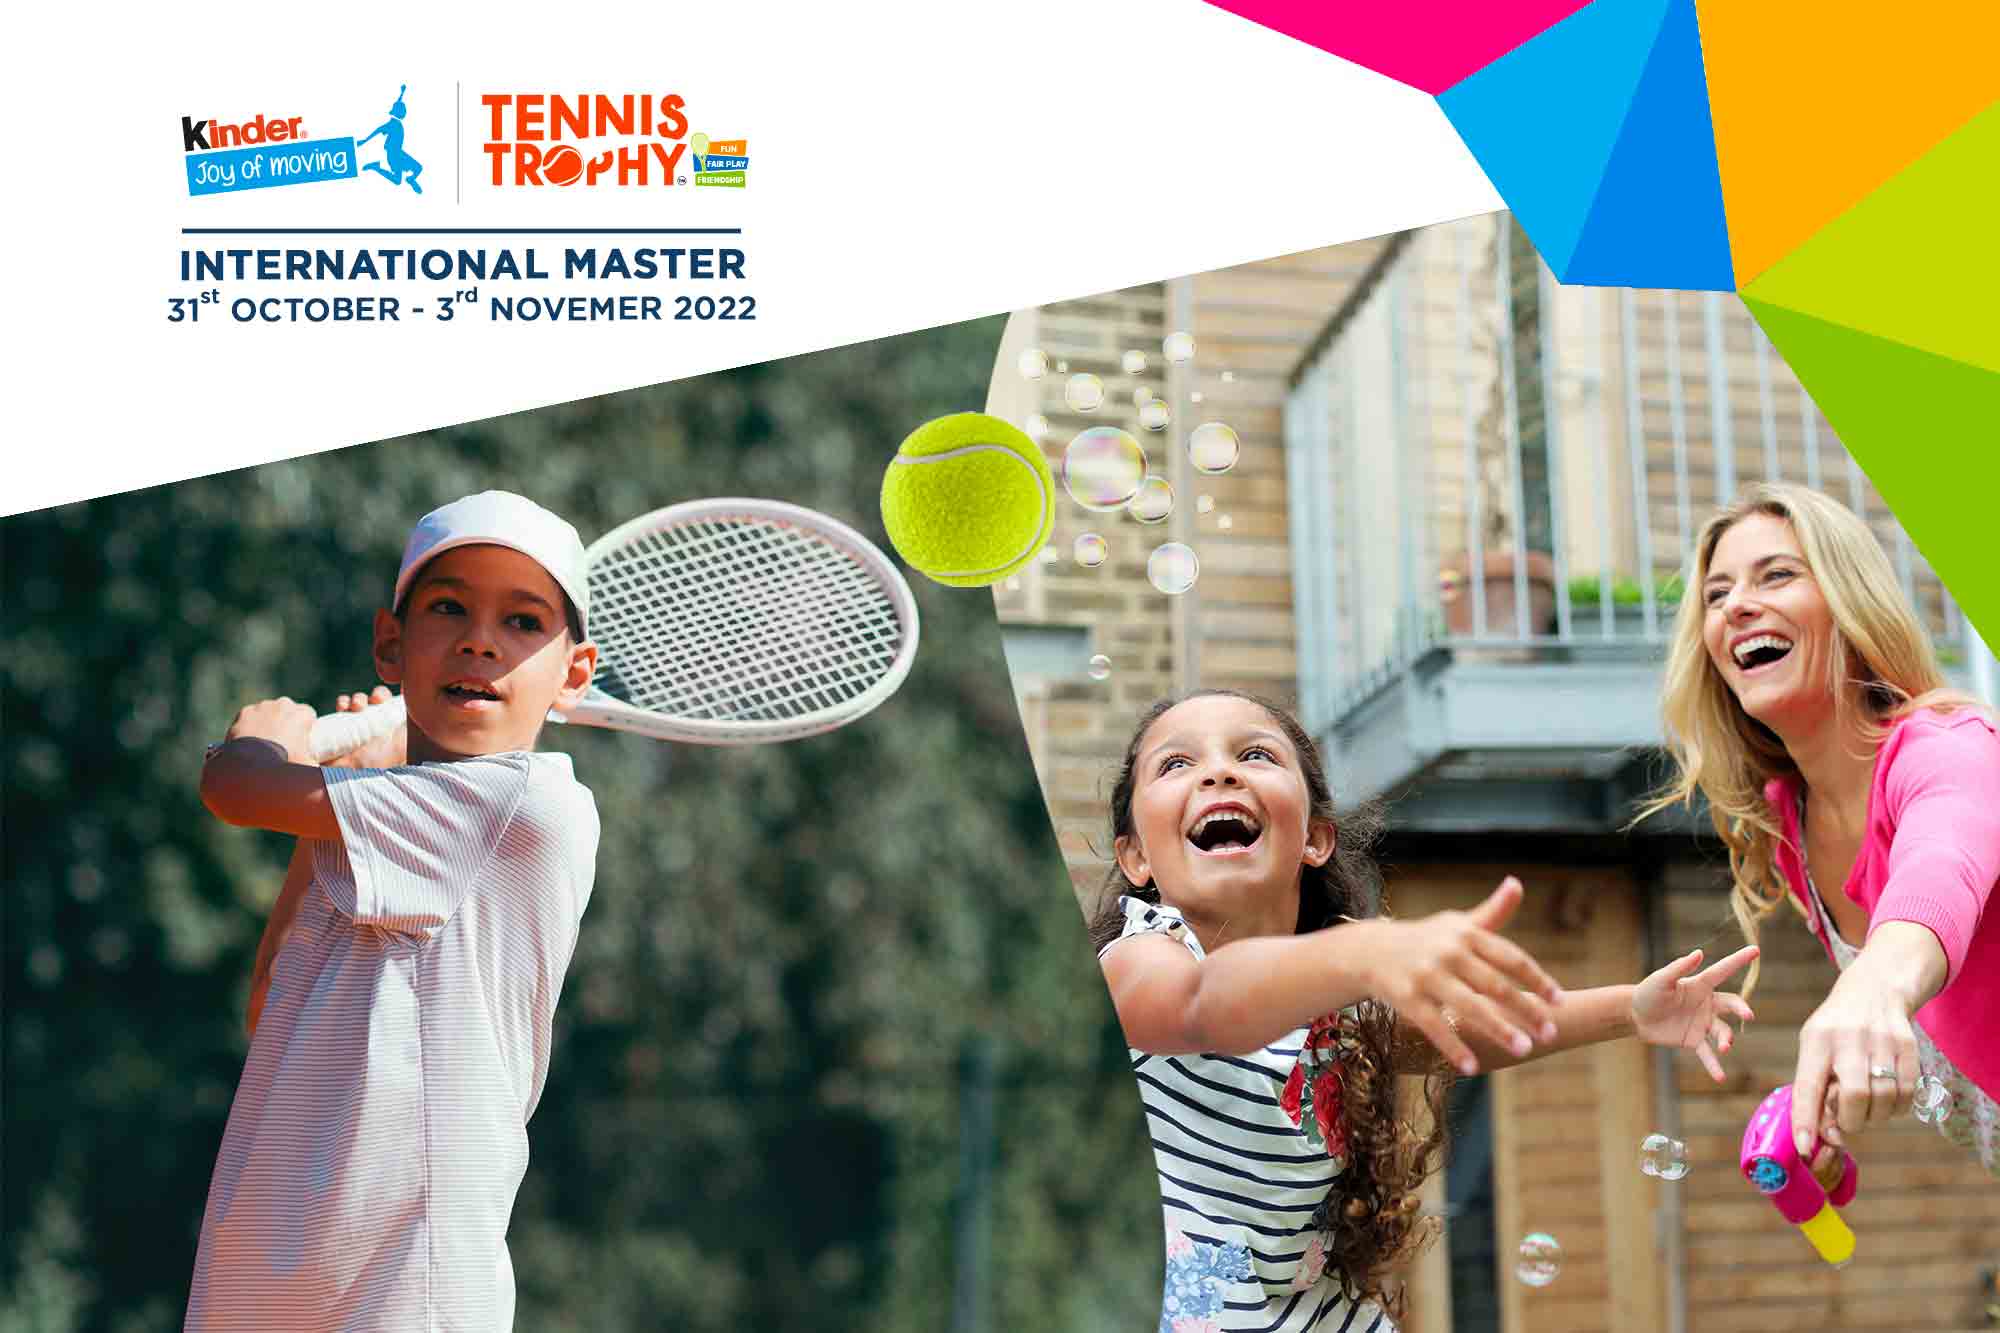 The Rafa Nadal Academy by Movistar hosts the Kinder Joy of moving Tennis Trophy International Master